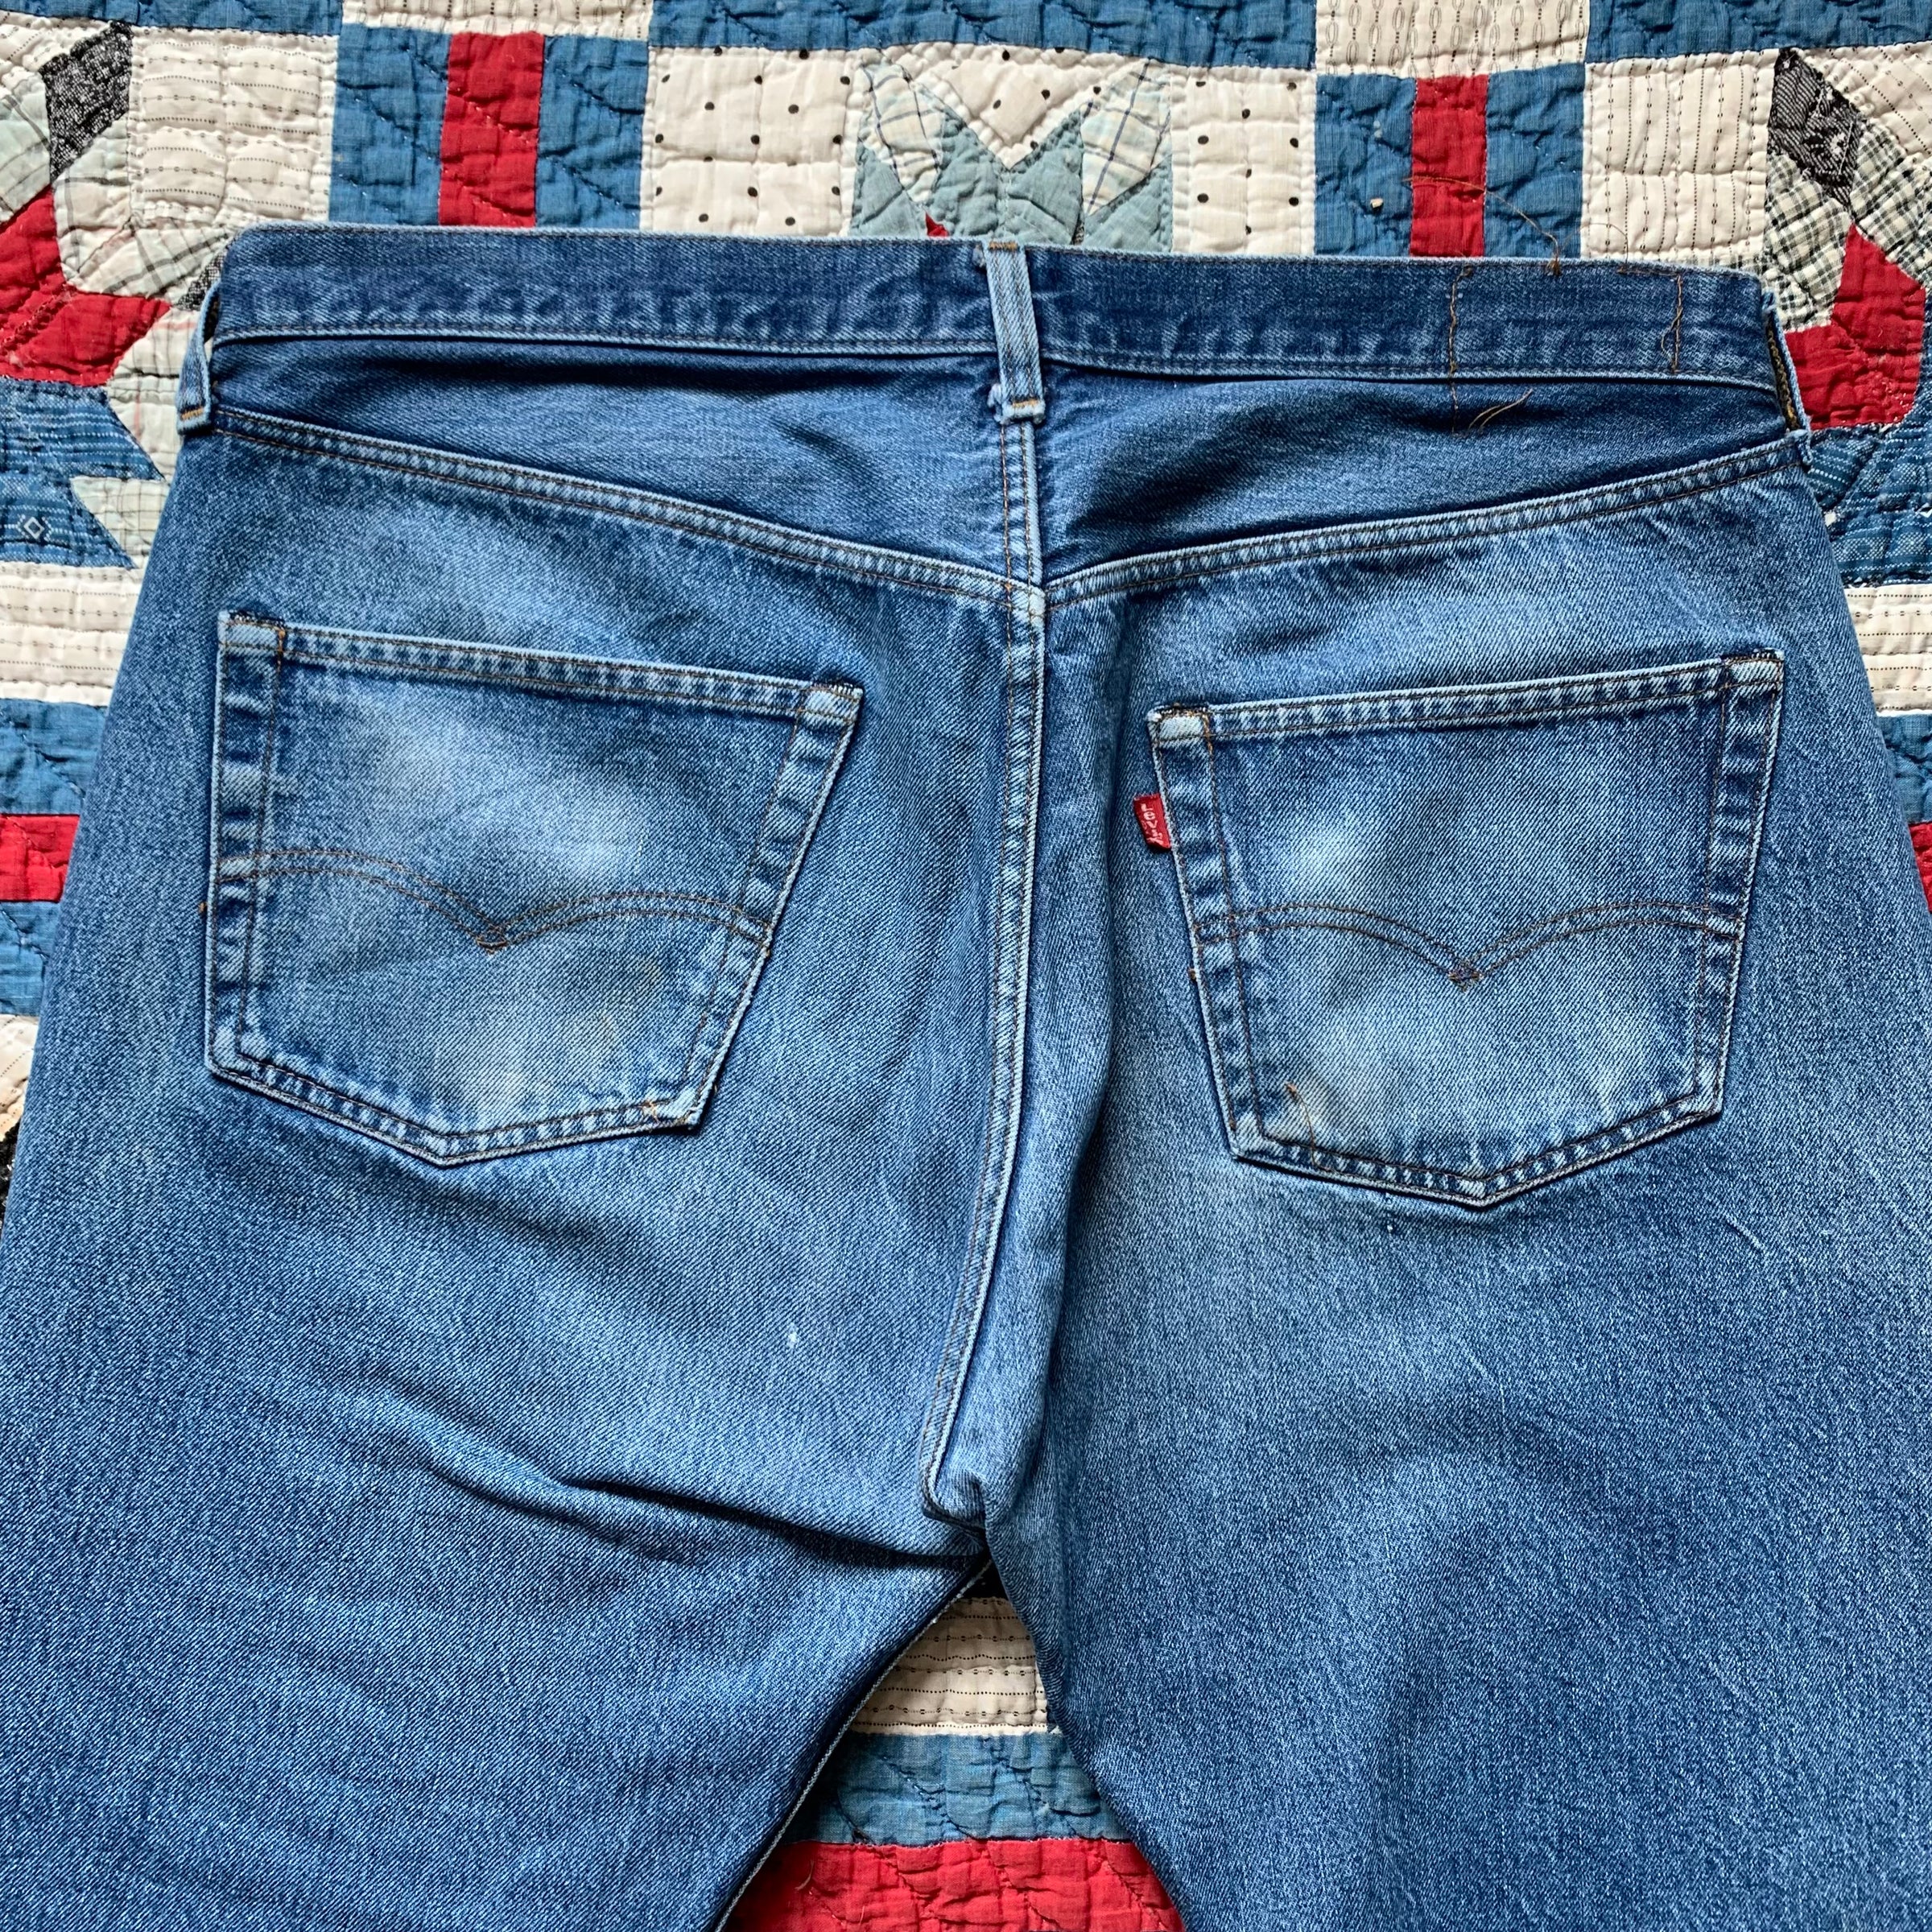 1980's Faded Levi's 501 Selvedge Redline Denim Jeans 38" x 29"